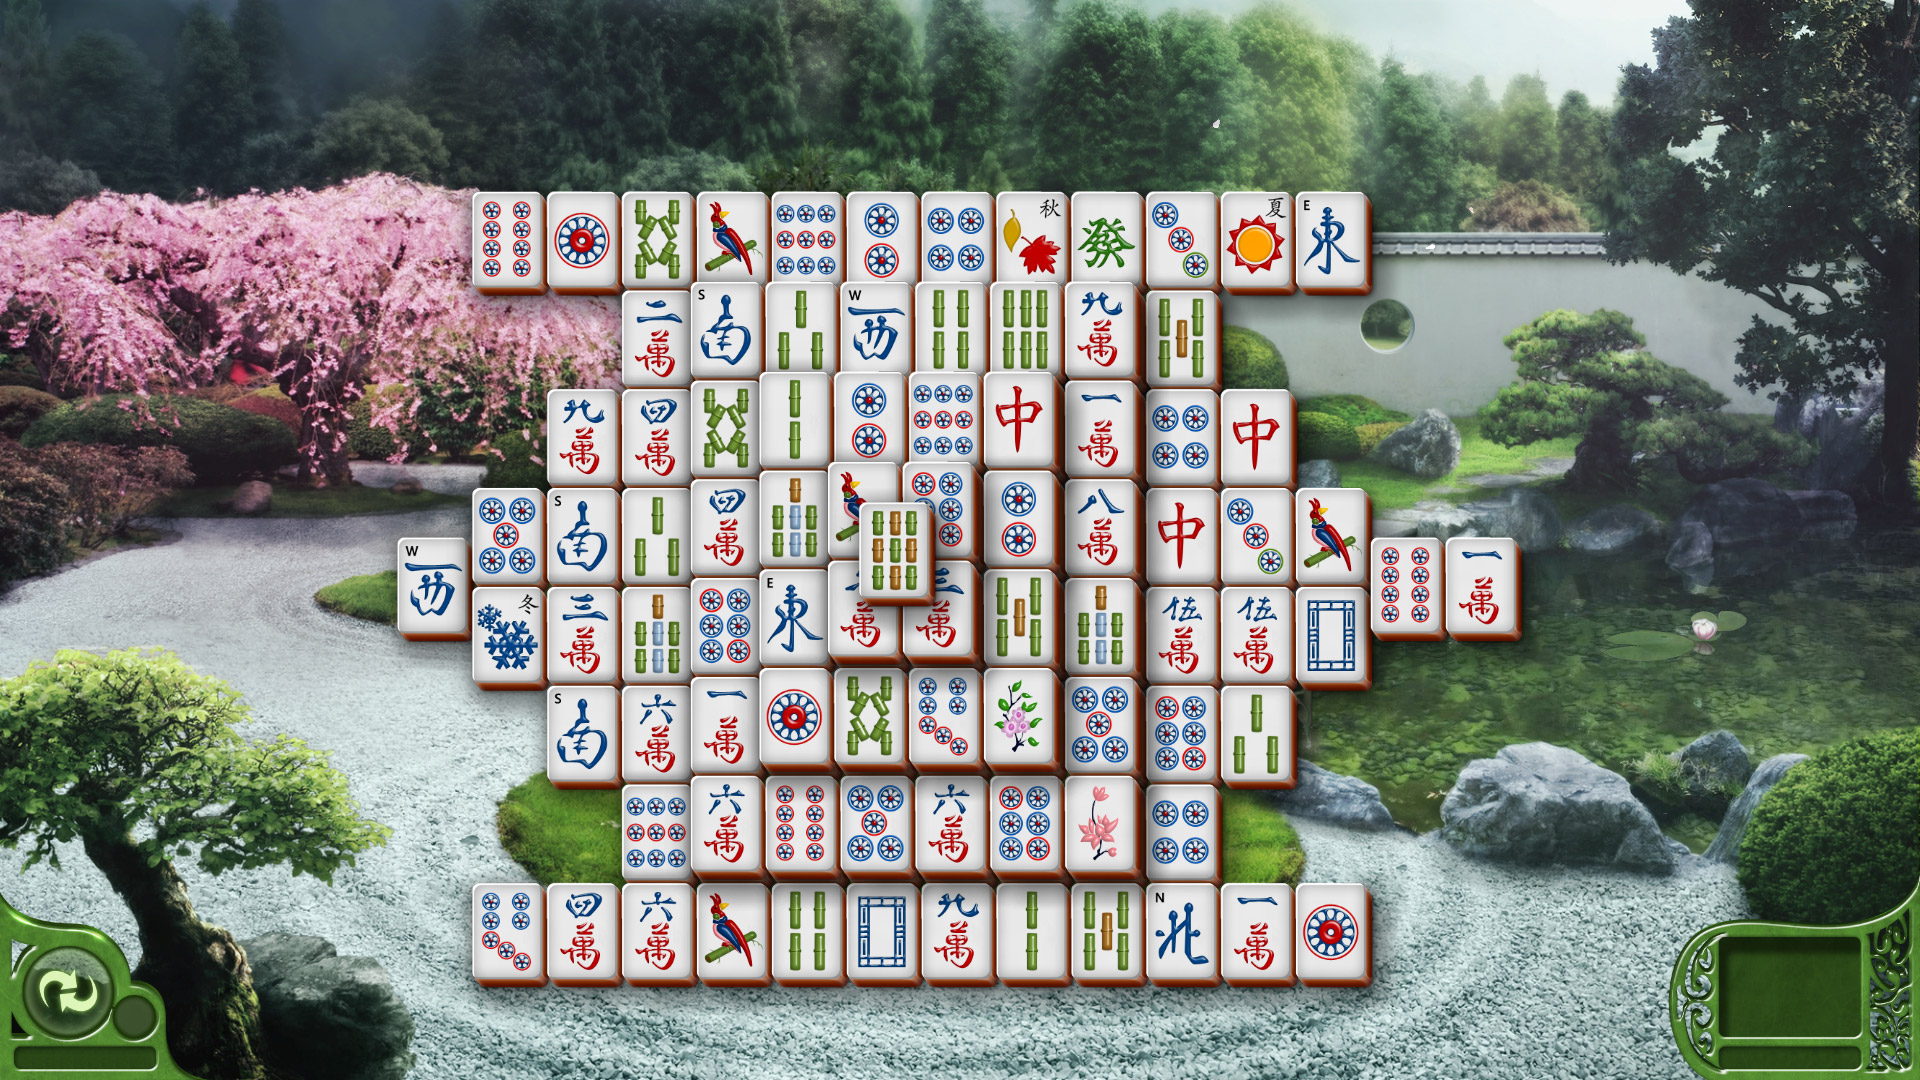 Mahjong Free downloading